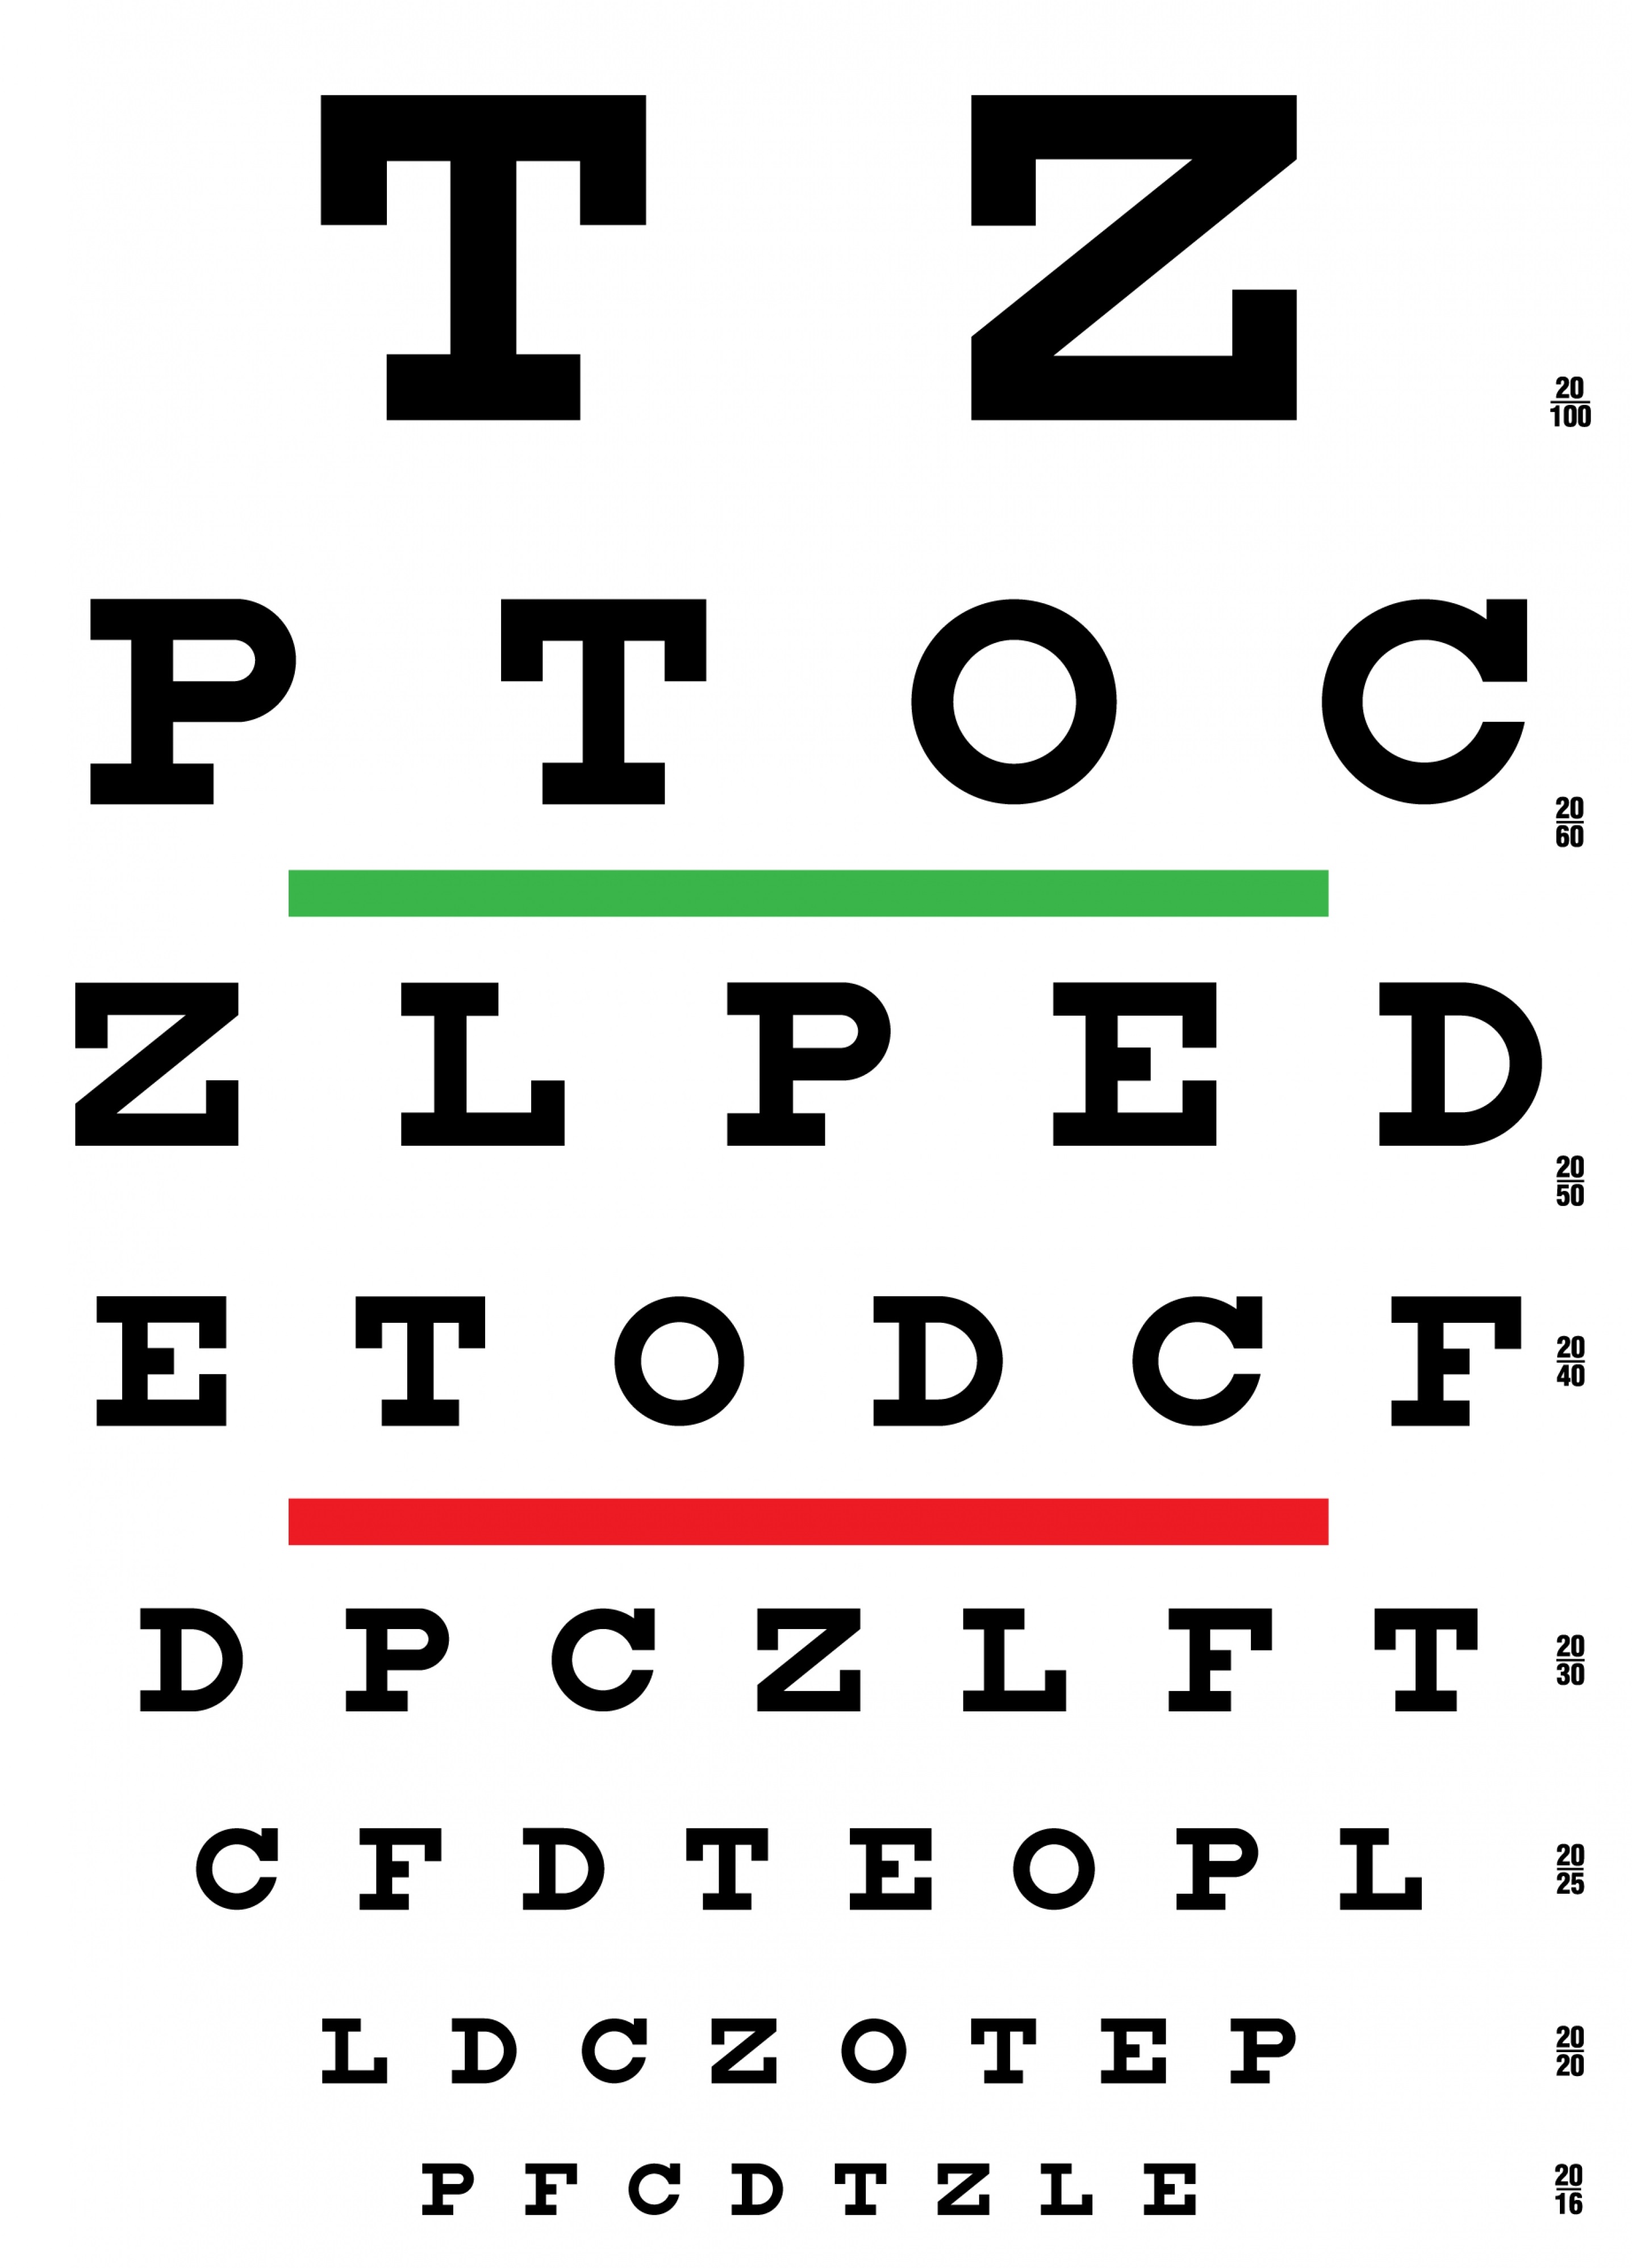 test online test ocular)